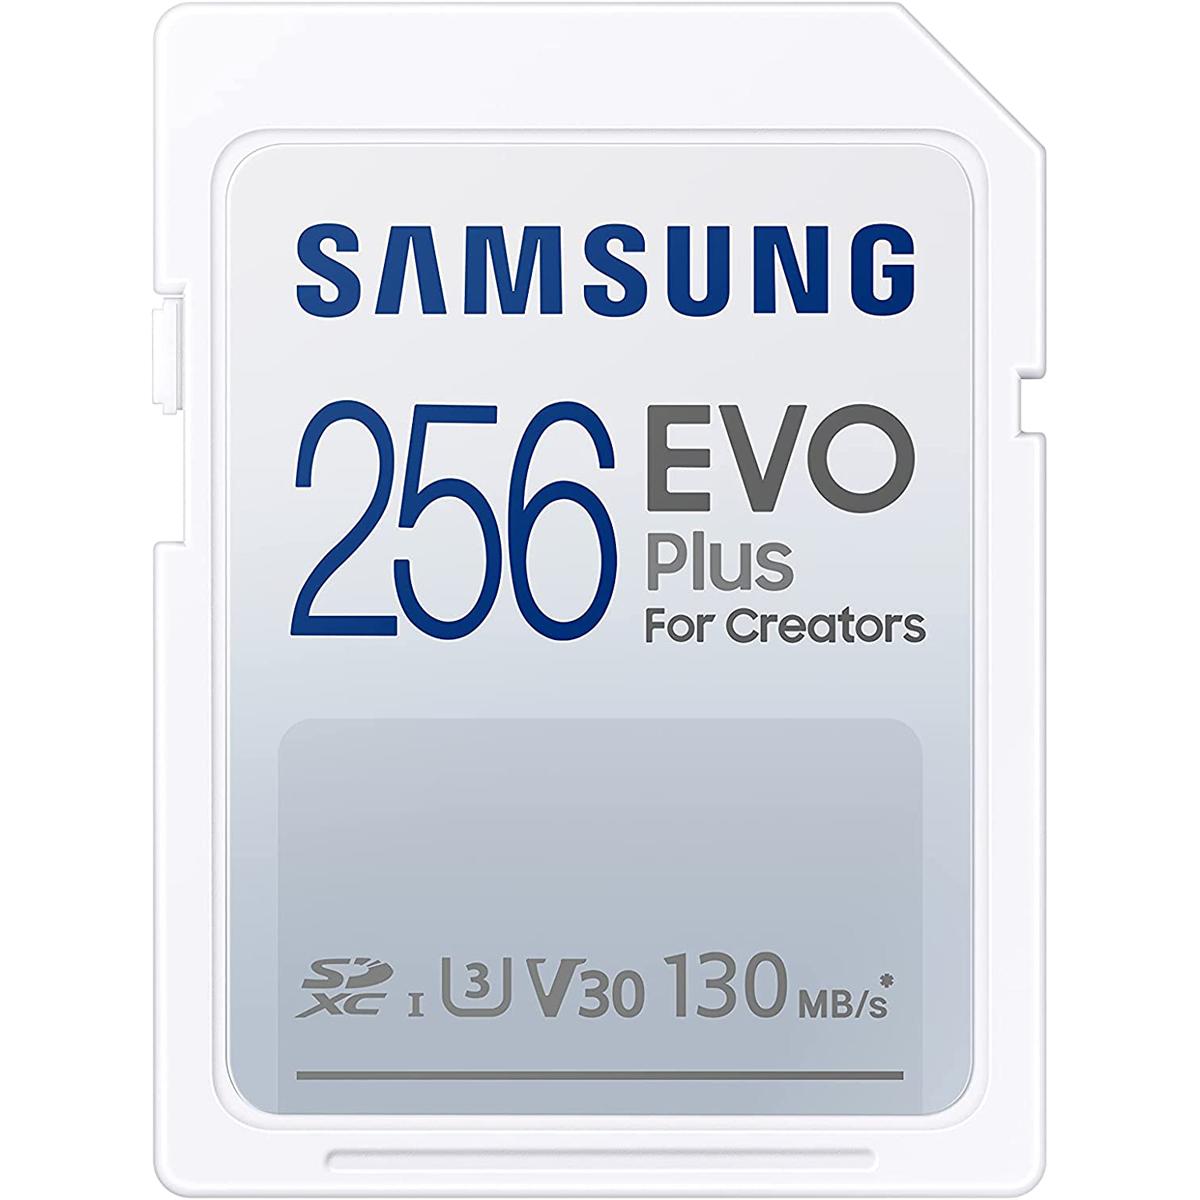 Samsung Evo Plus 256GB U3 SDXC Memory Card for $21.99